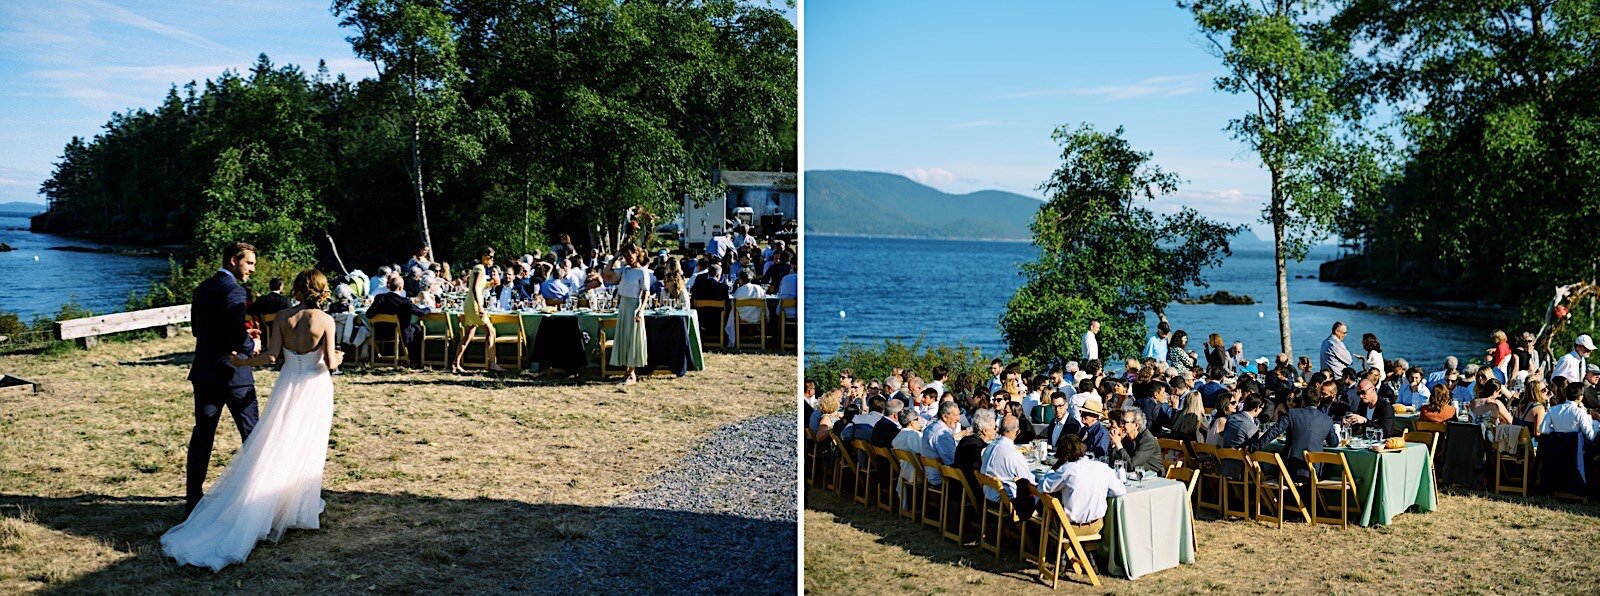 54_Island_On_Reception_san_casual_Wedding_by_juan_Outdoor_Orcas_best_photographer.jpg